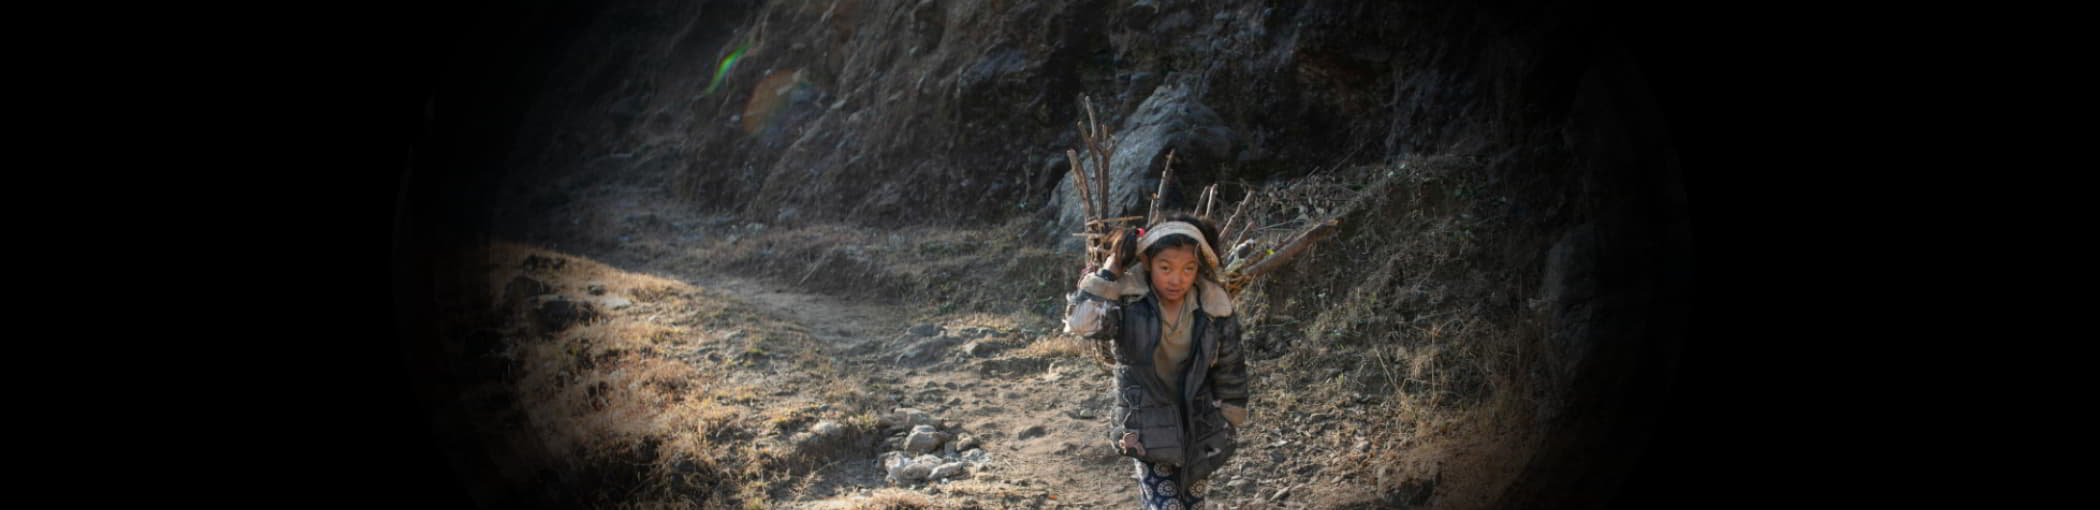 Elimination of Child Labor